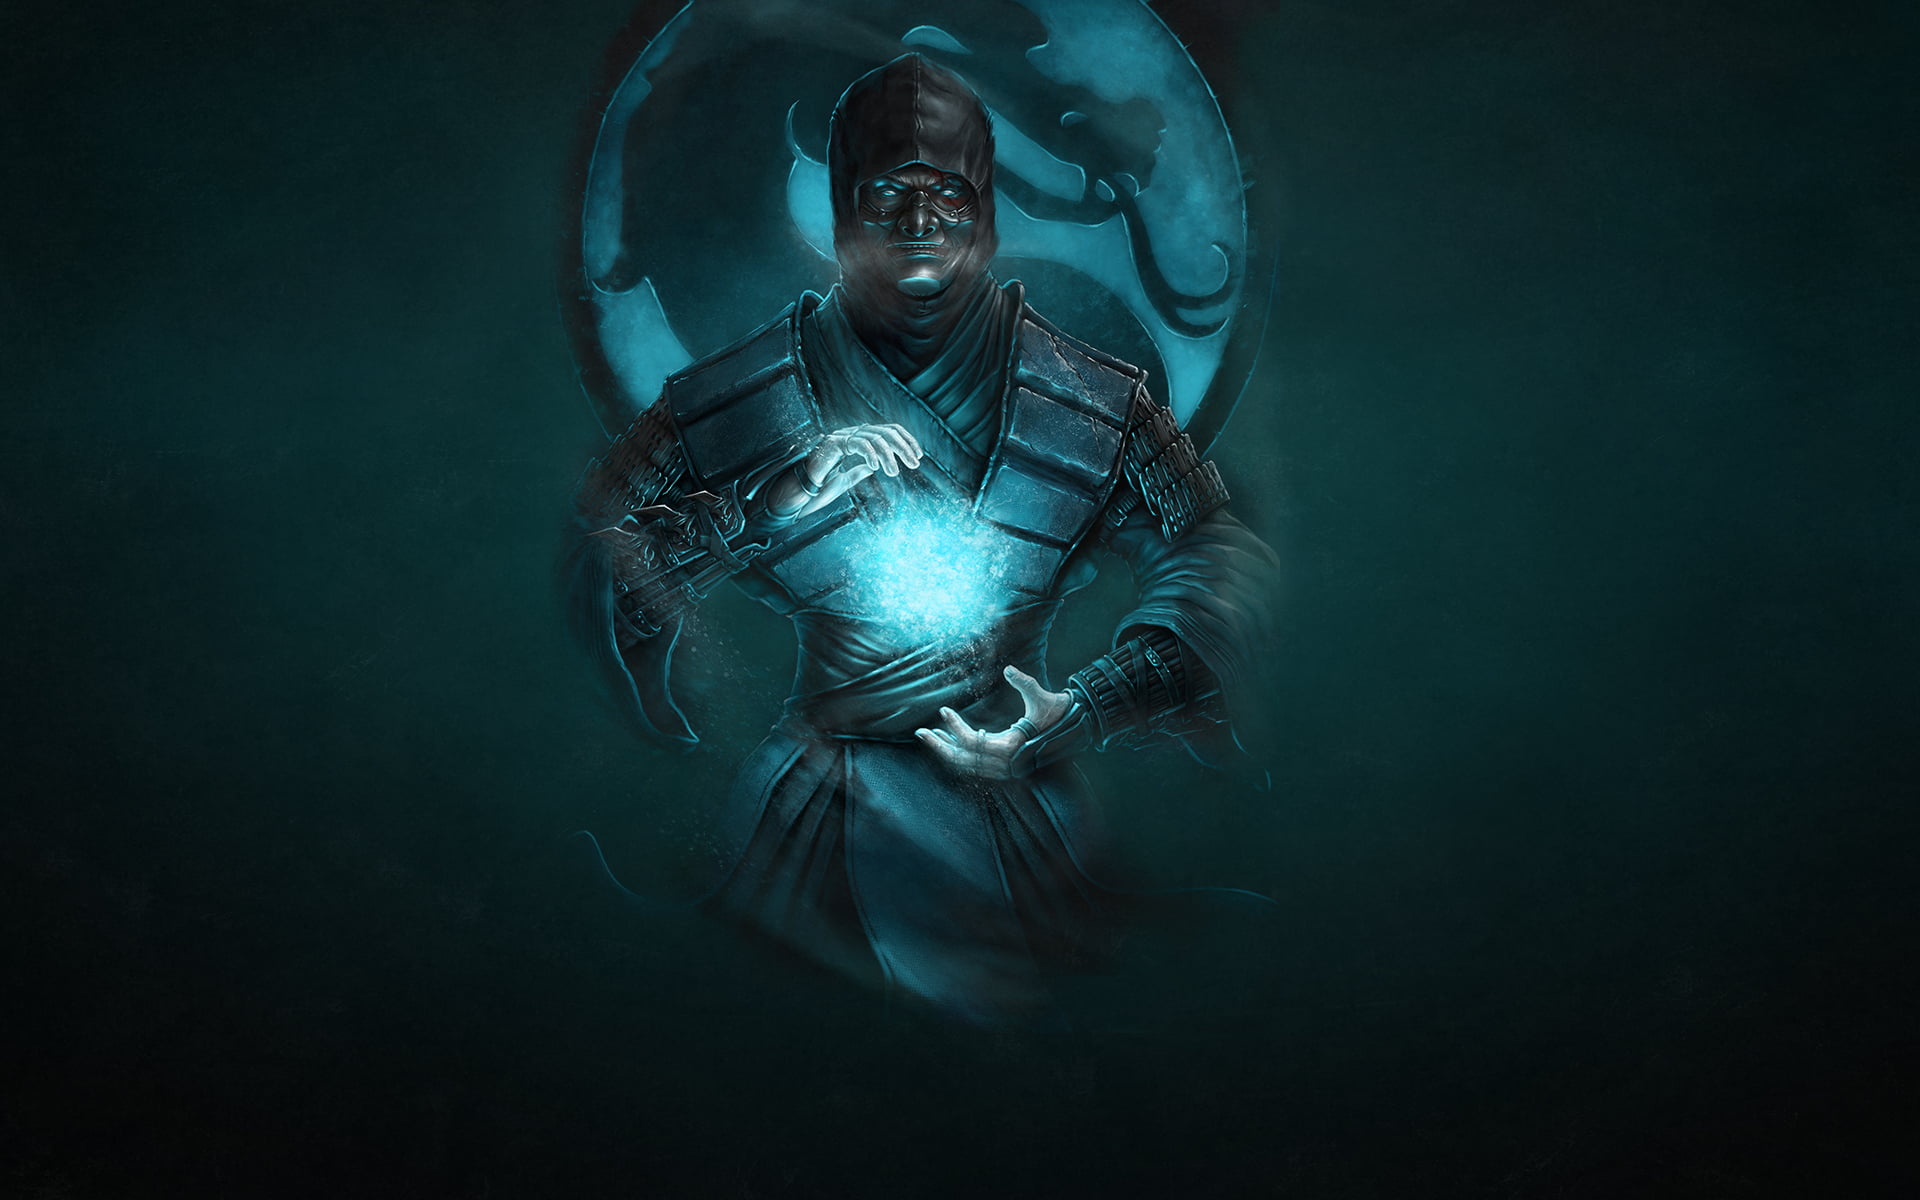 Mortal Kombat Sub-Zero digital wallpaper, cold, the dark background